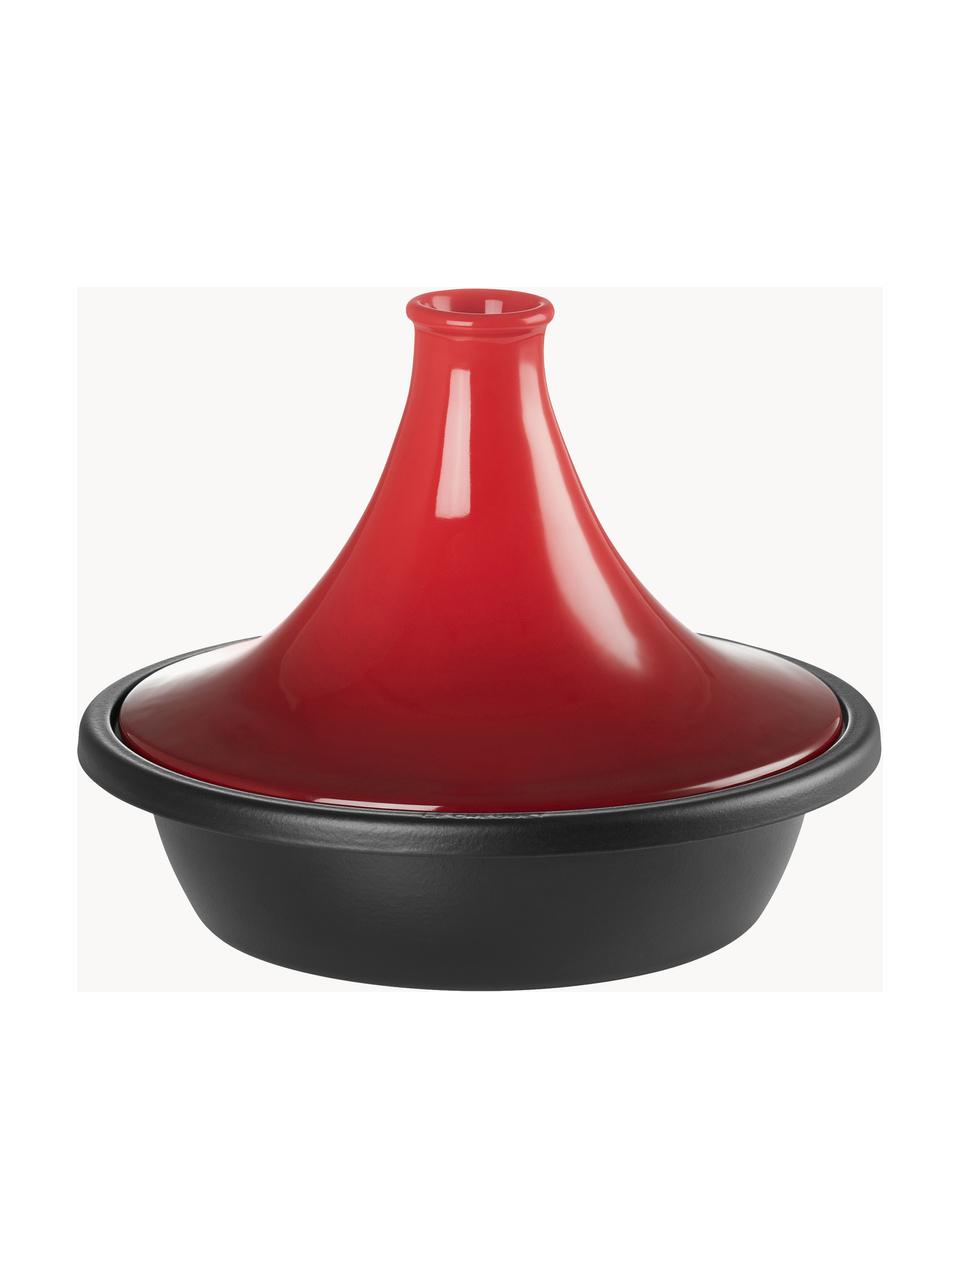 Tagine pot Creuset, Deksel: keramiek, Pot: ijzer, geëmailleerd, Rood, zwart, Ø 32 cm x H 31 cm, 3,7 L